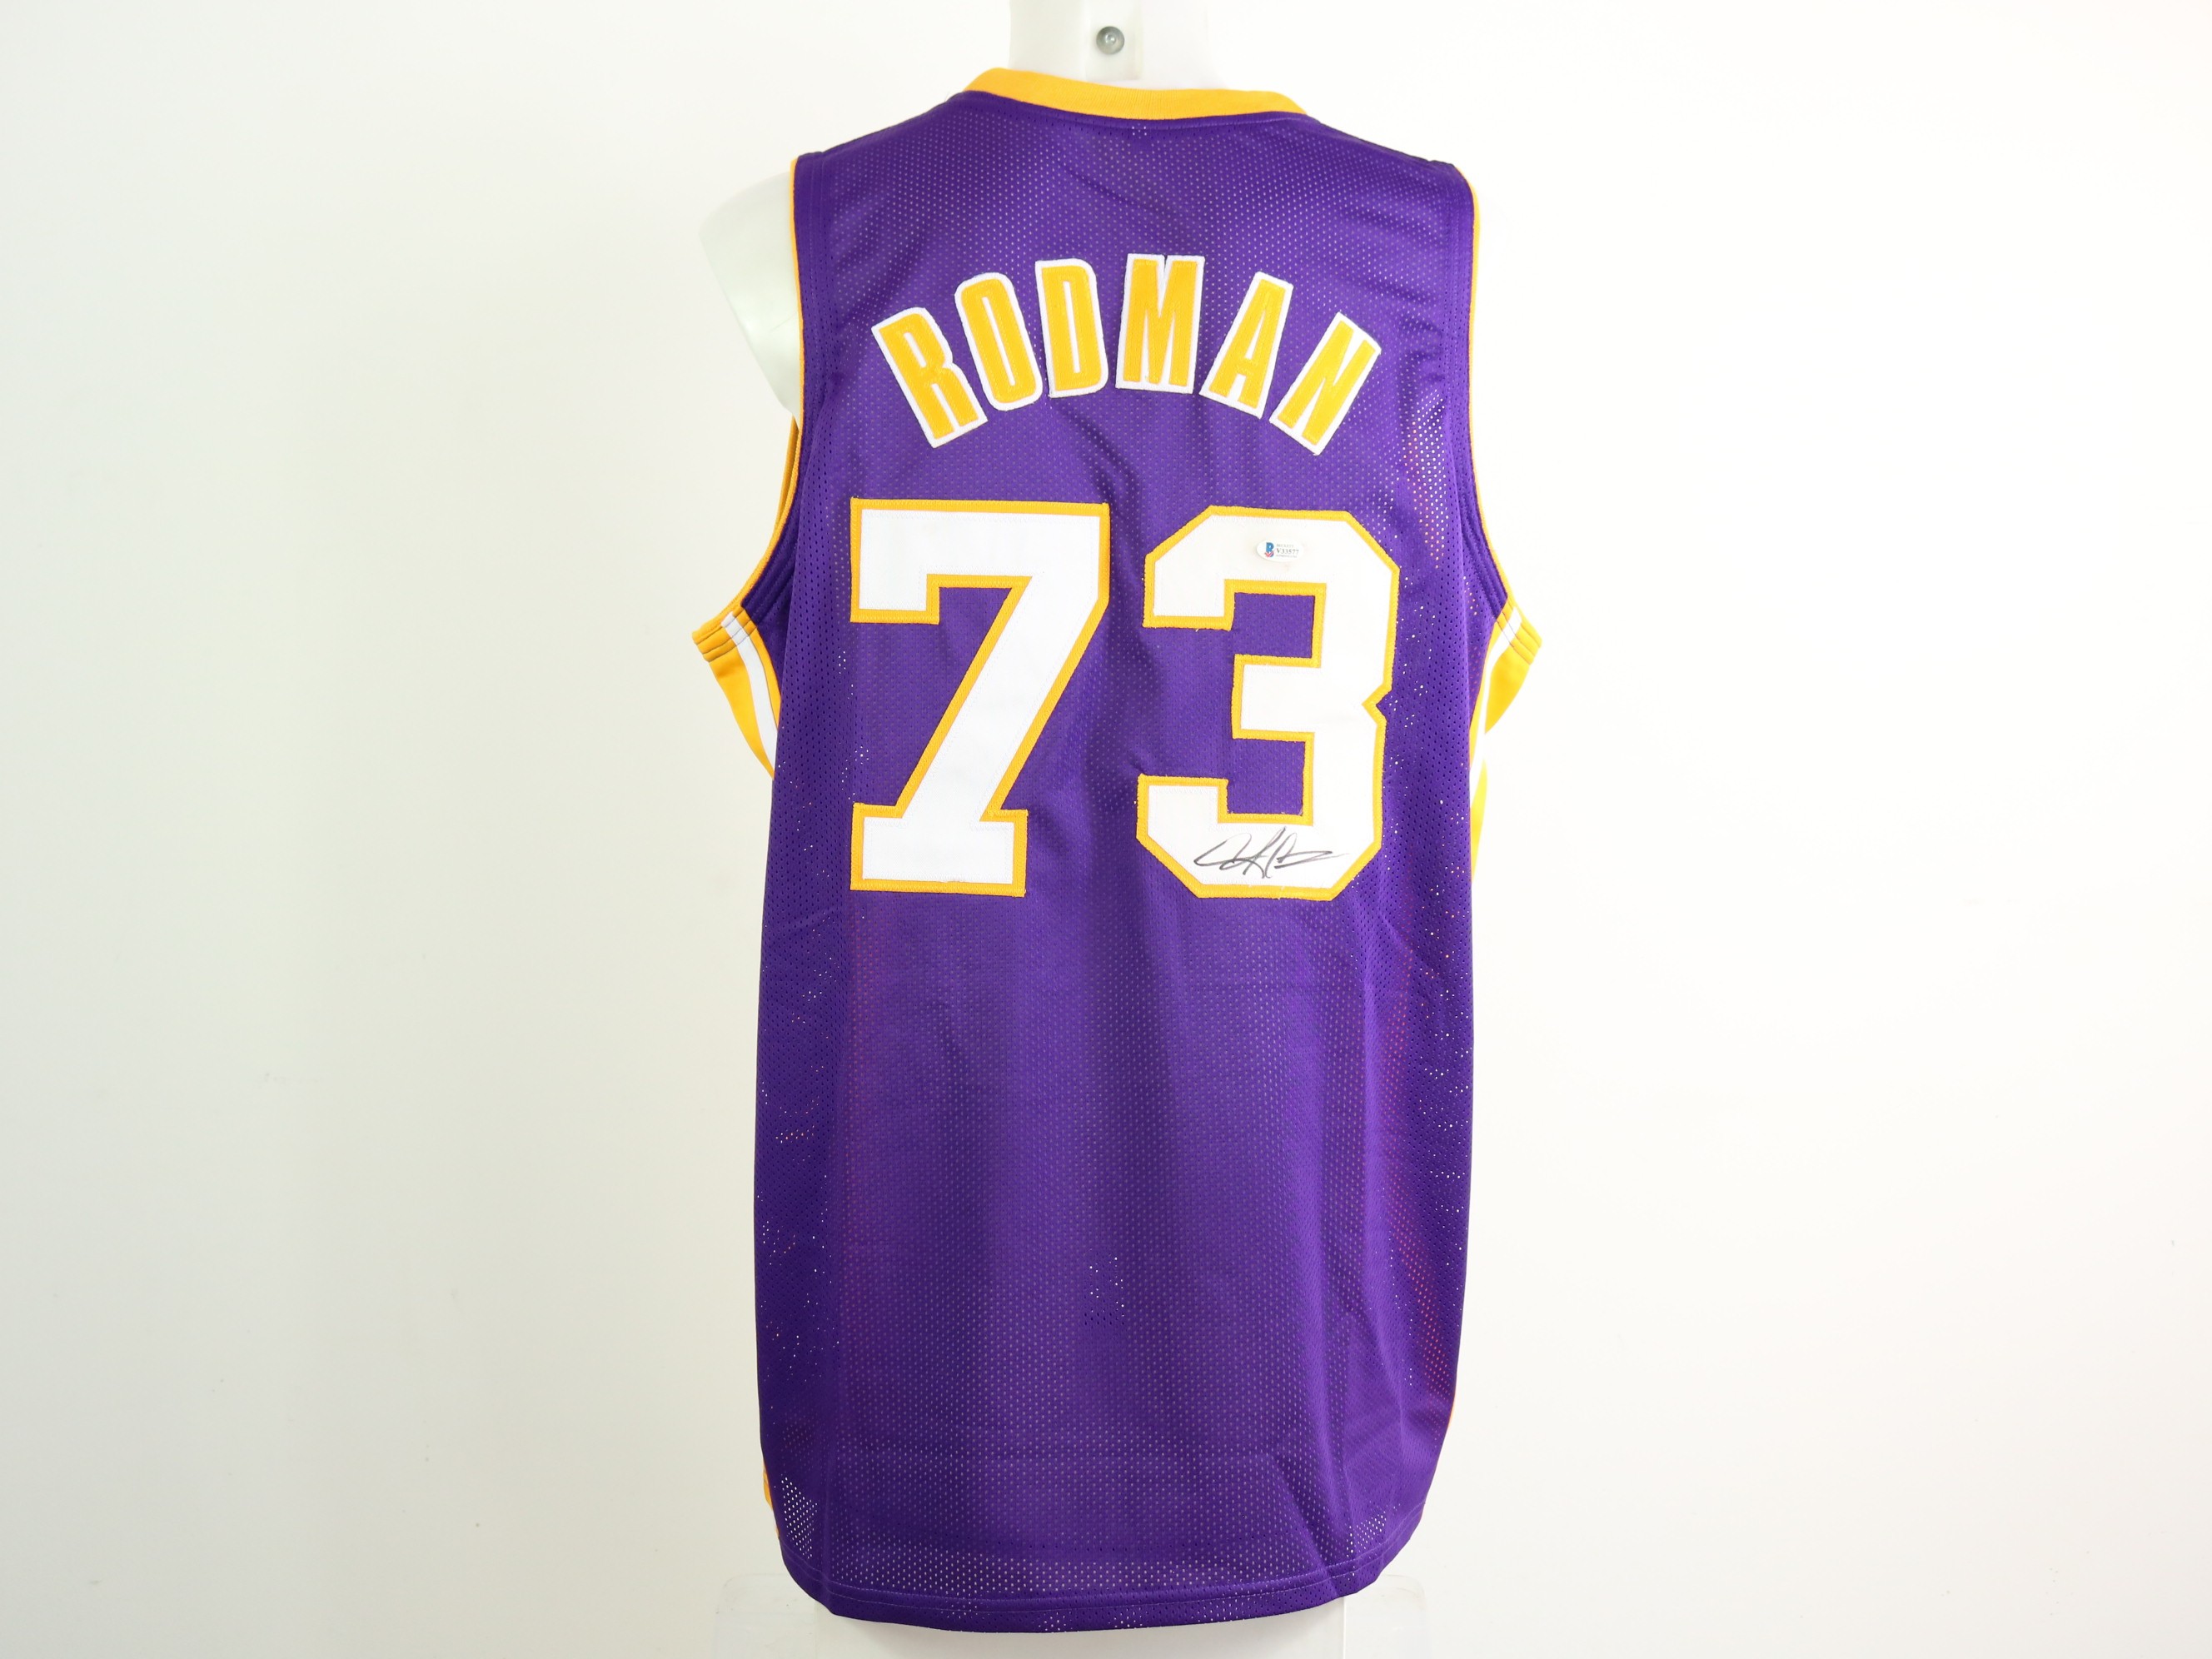 Dennis Rodman Signed Lakers Jersey - CharityStars